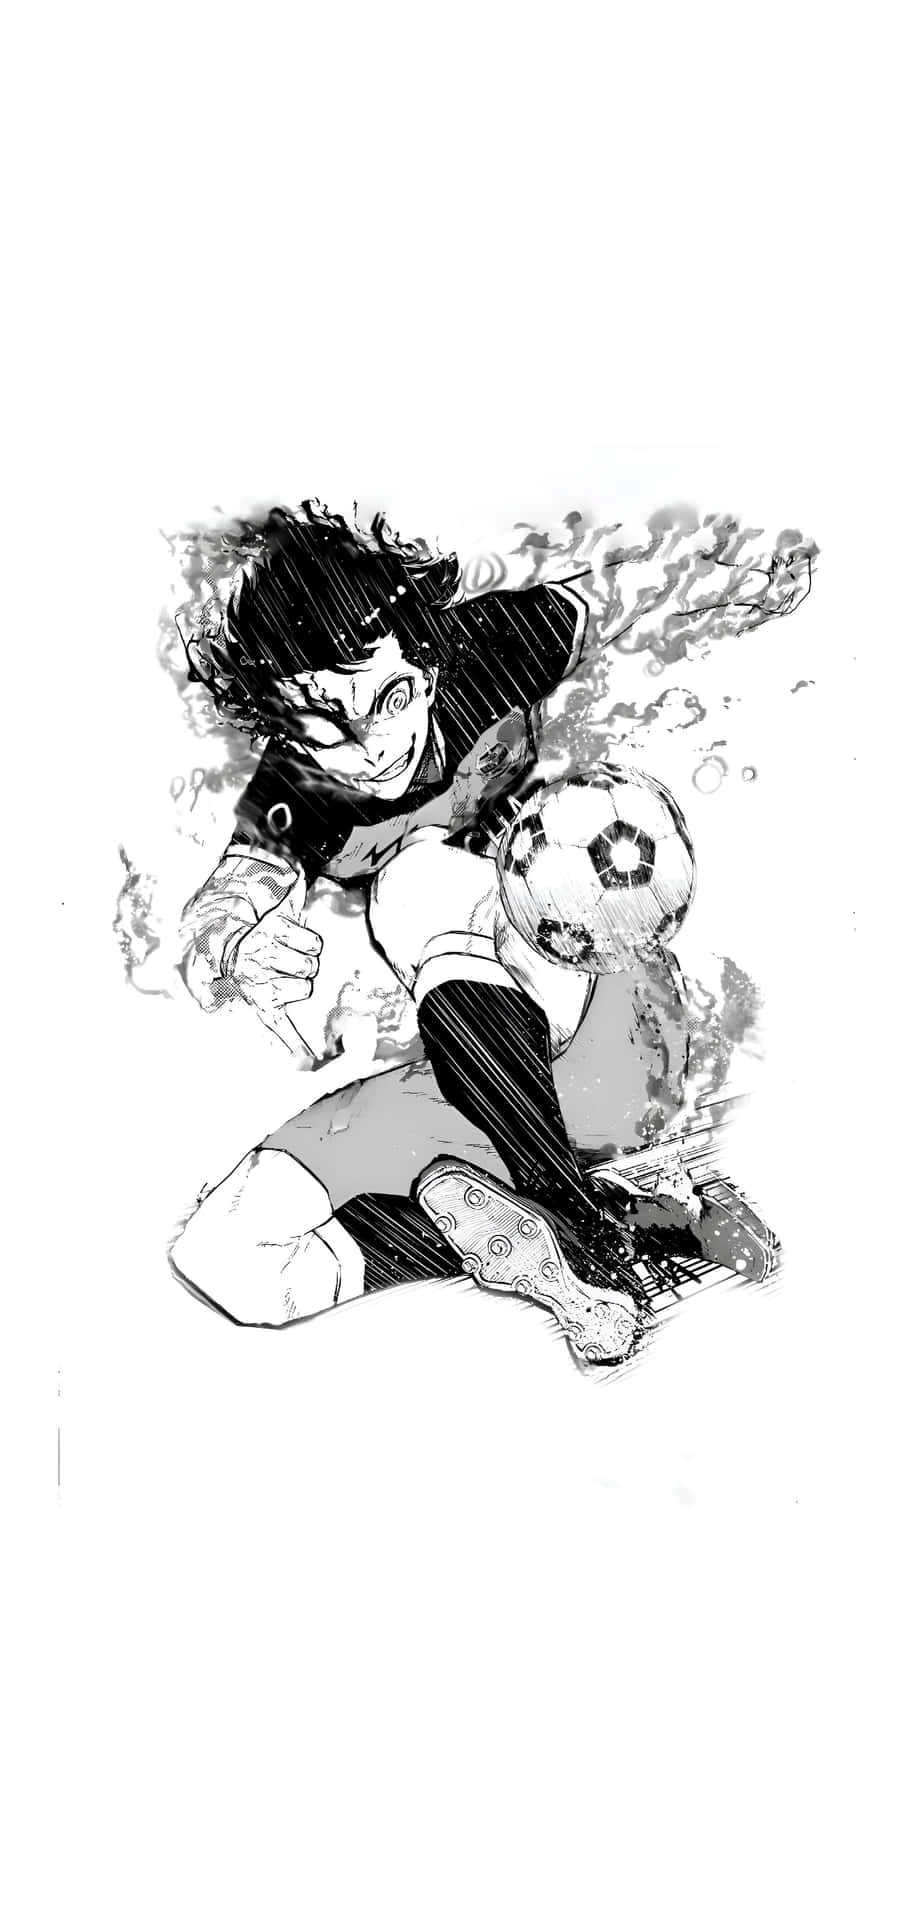 Dynamic Soccer Player Sketch Wallpaper